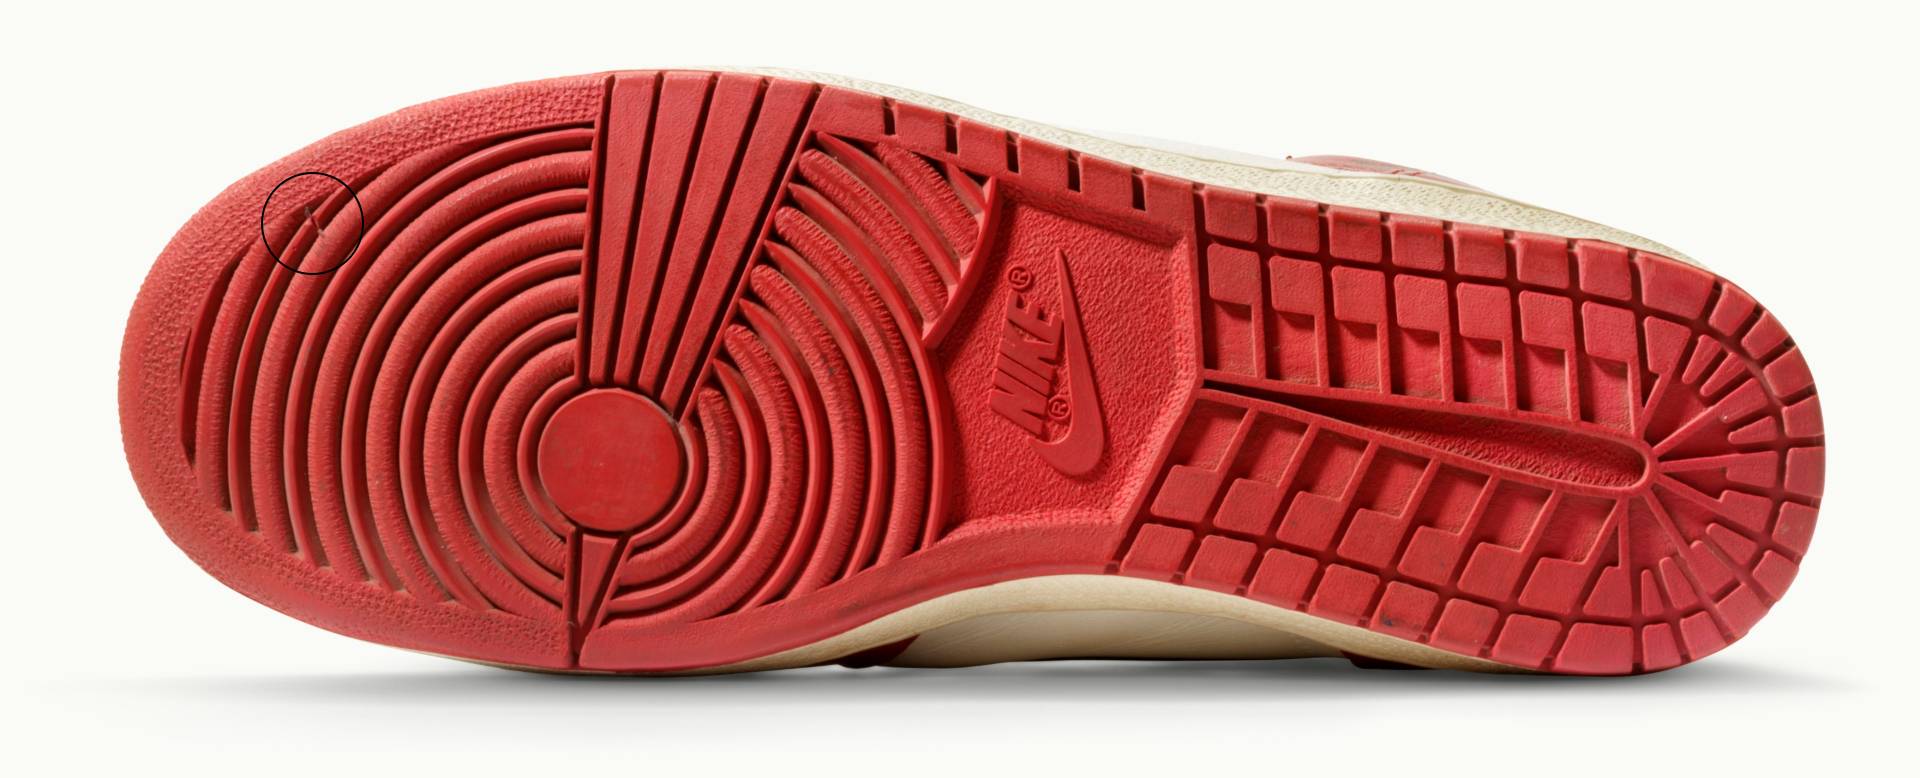 Nike Air Jordan 1 High foi considerado incomum por ter caco de vidro na sola